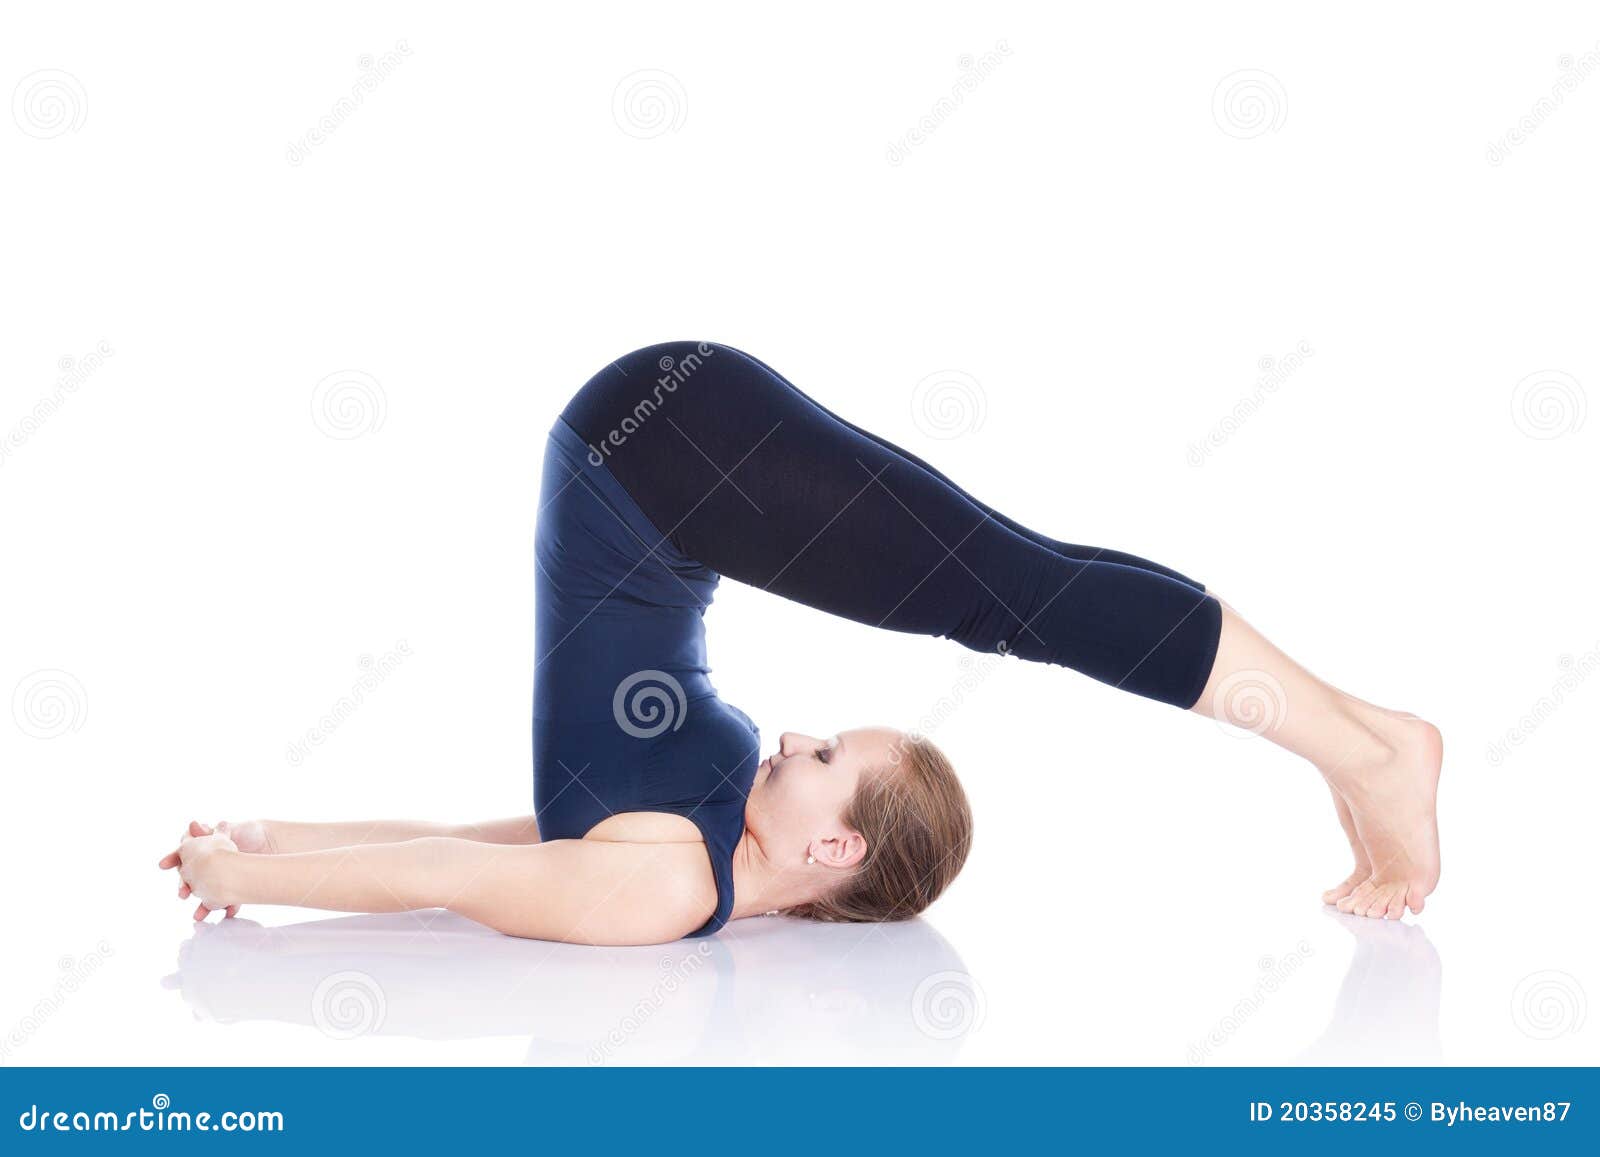 yoga halasana plough pose